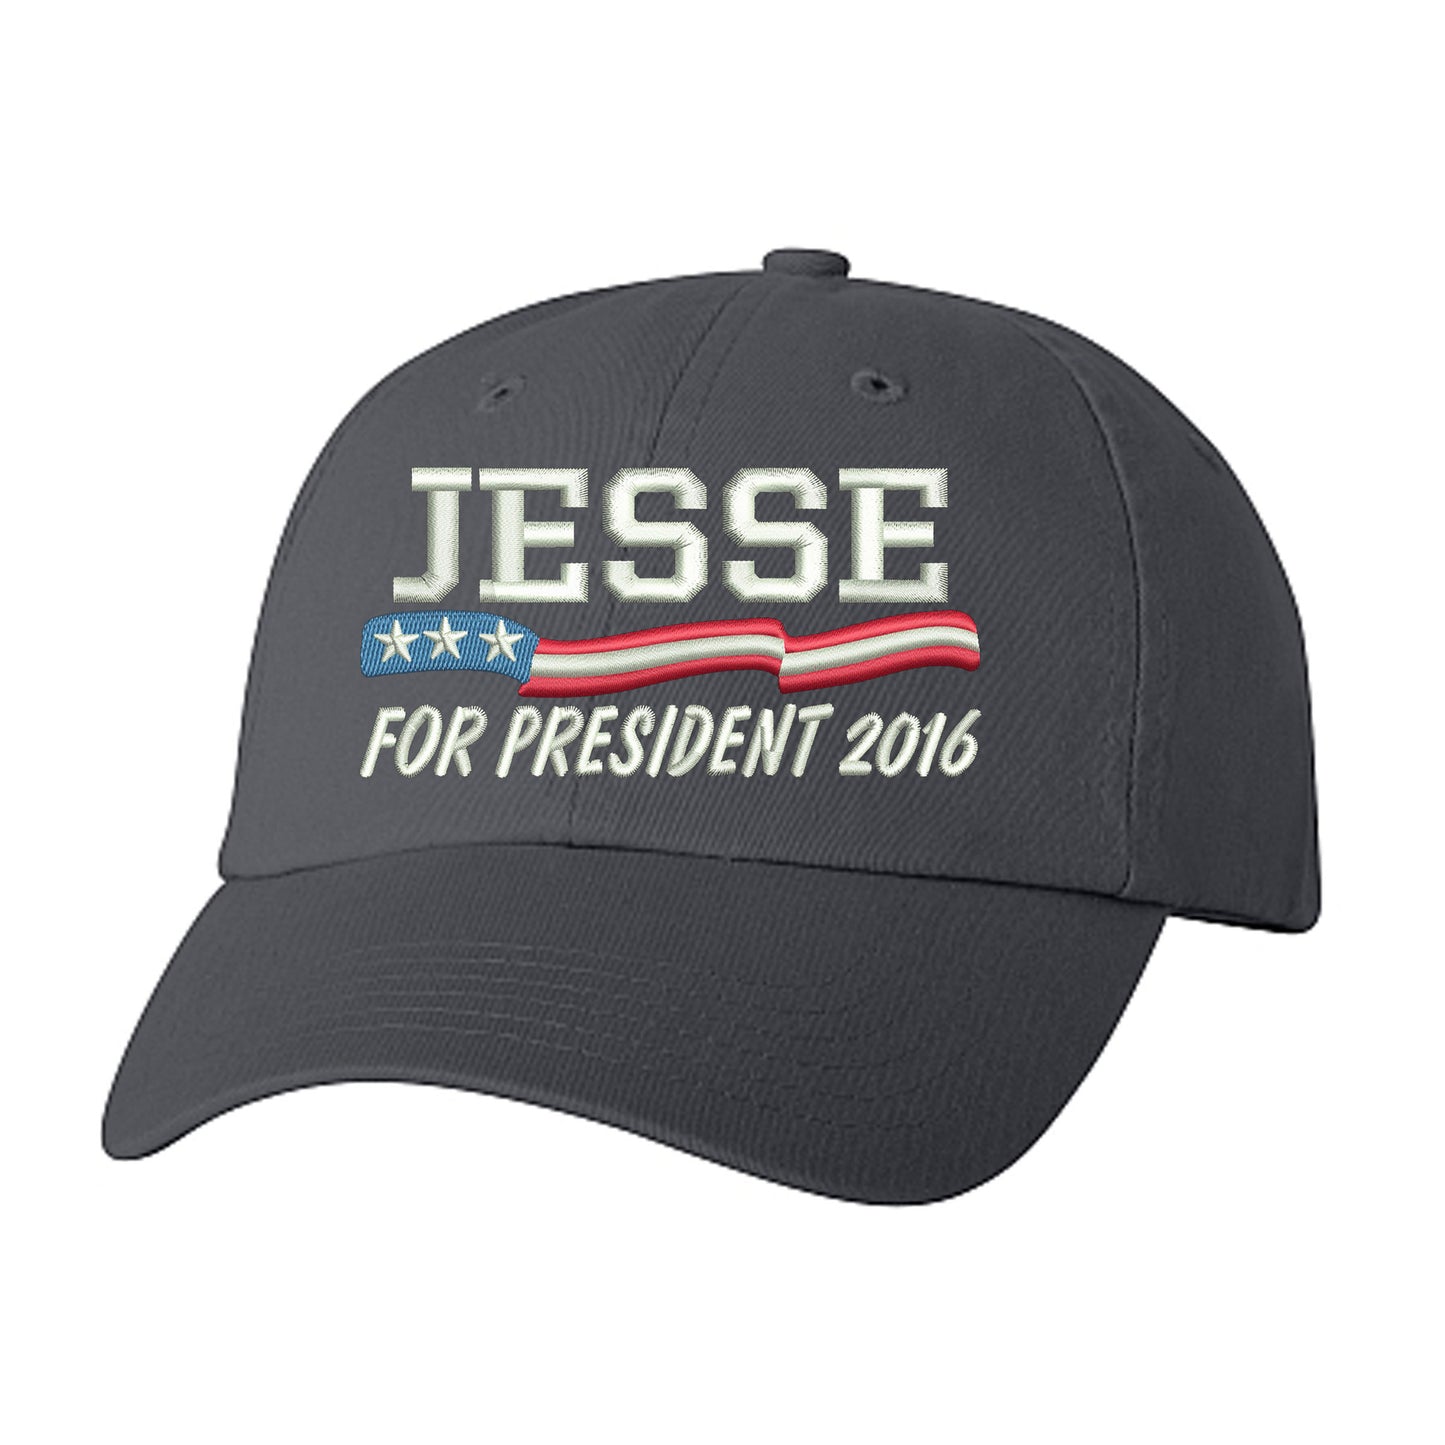 Urban Argyle | Jesse for President | Low Profile Cap - Navy